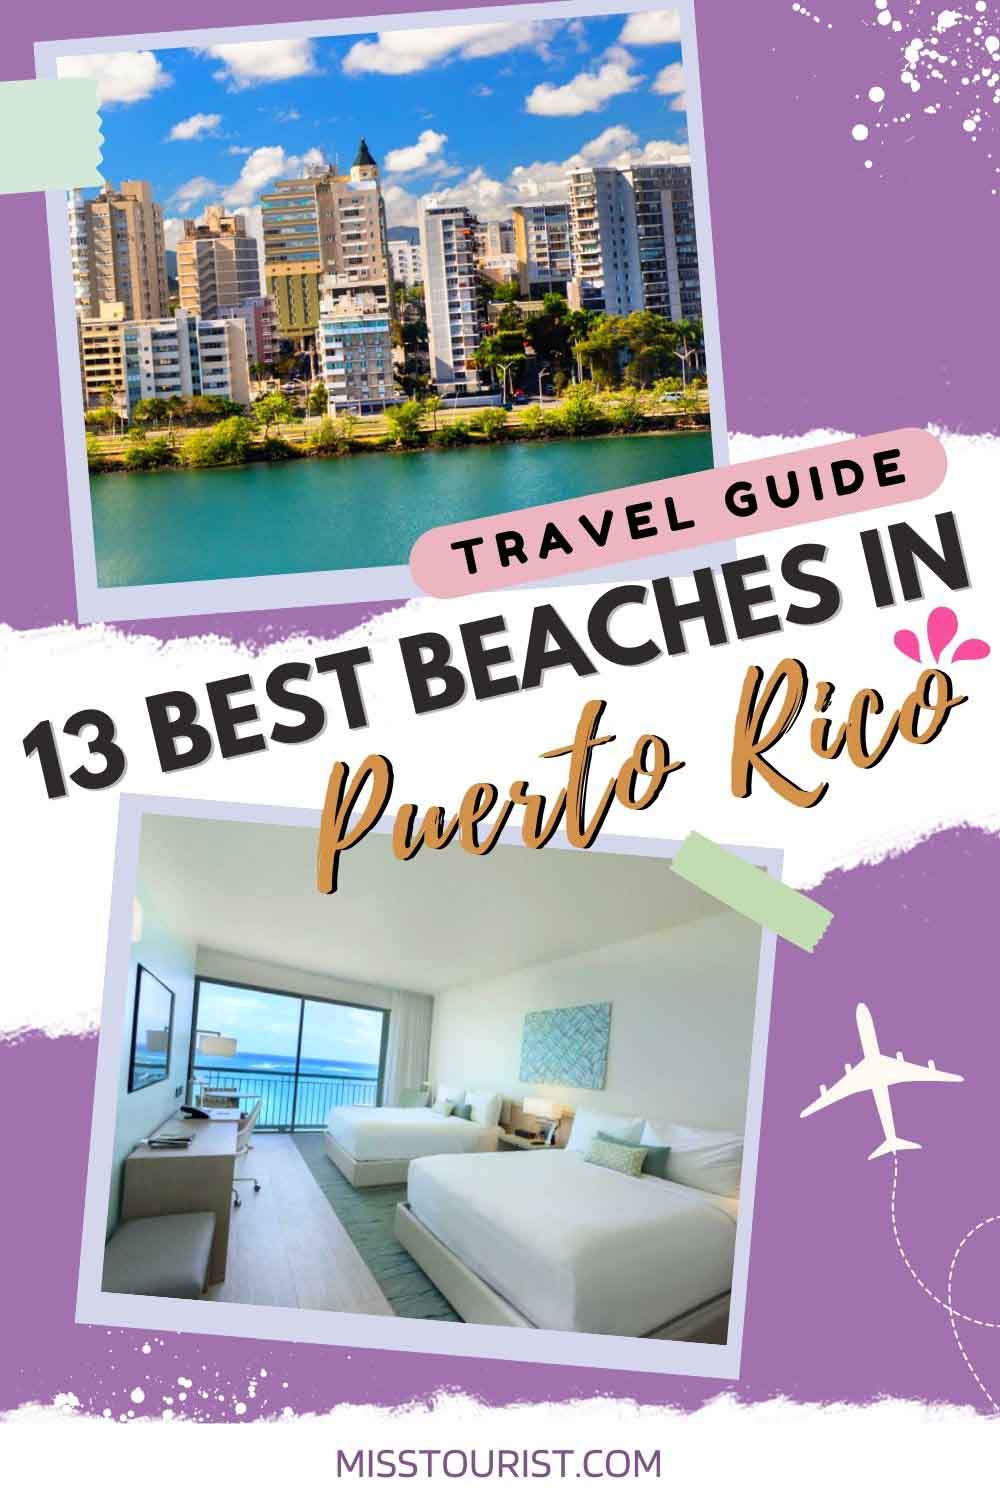 Best beaches in puerto rico pin 1